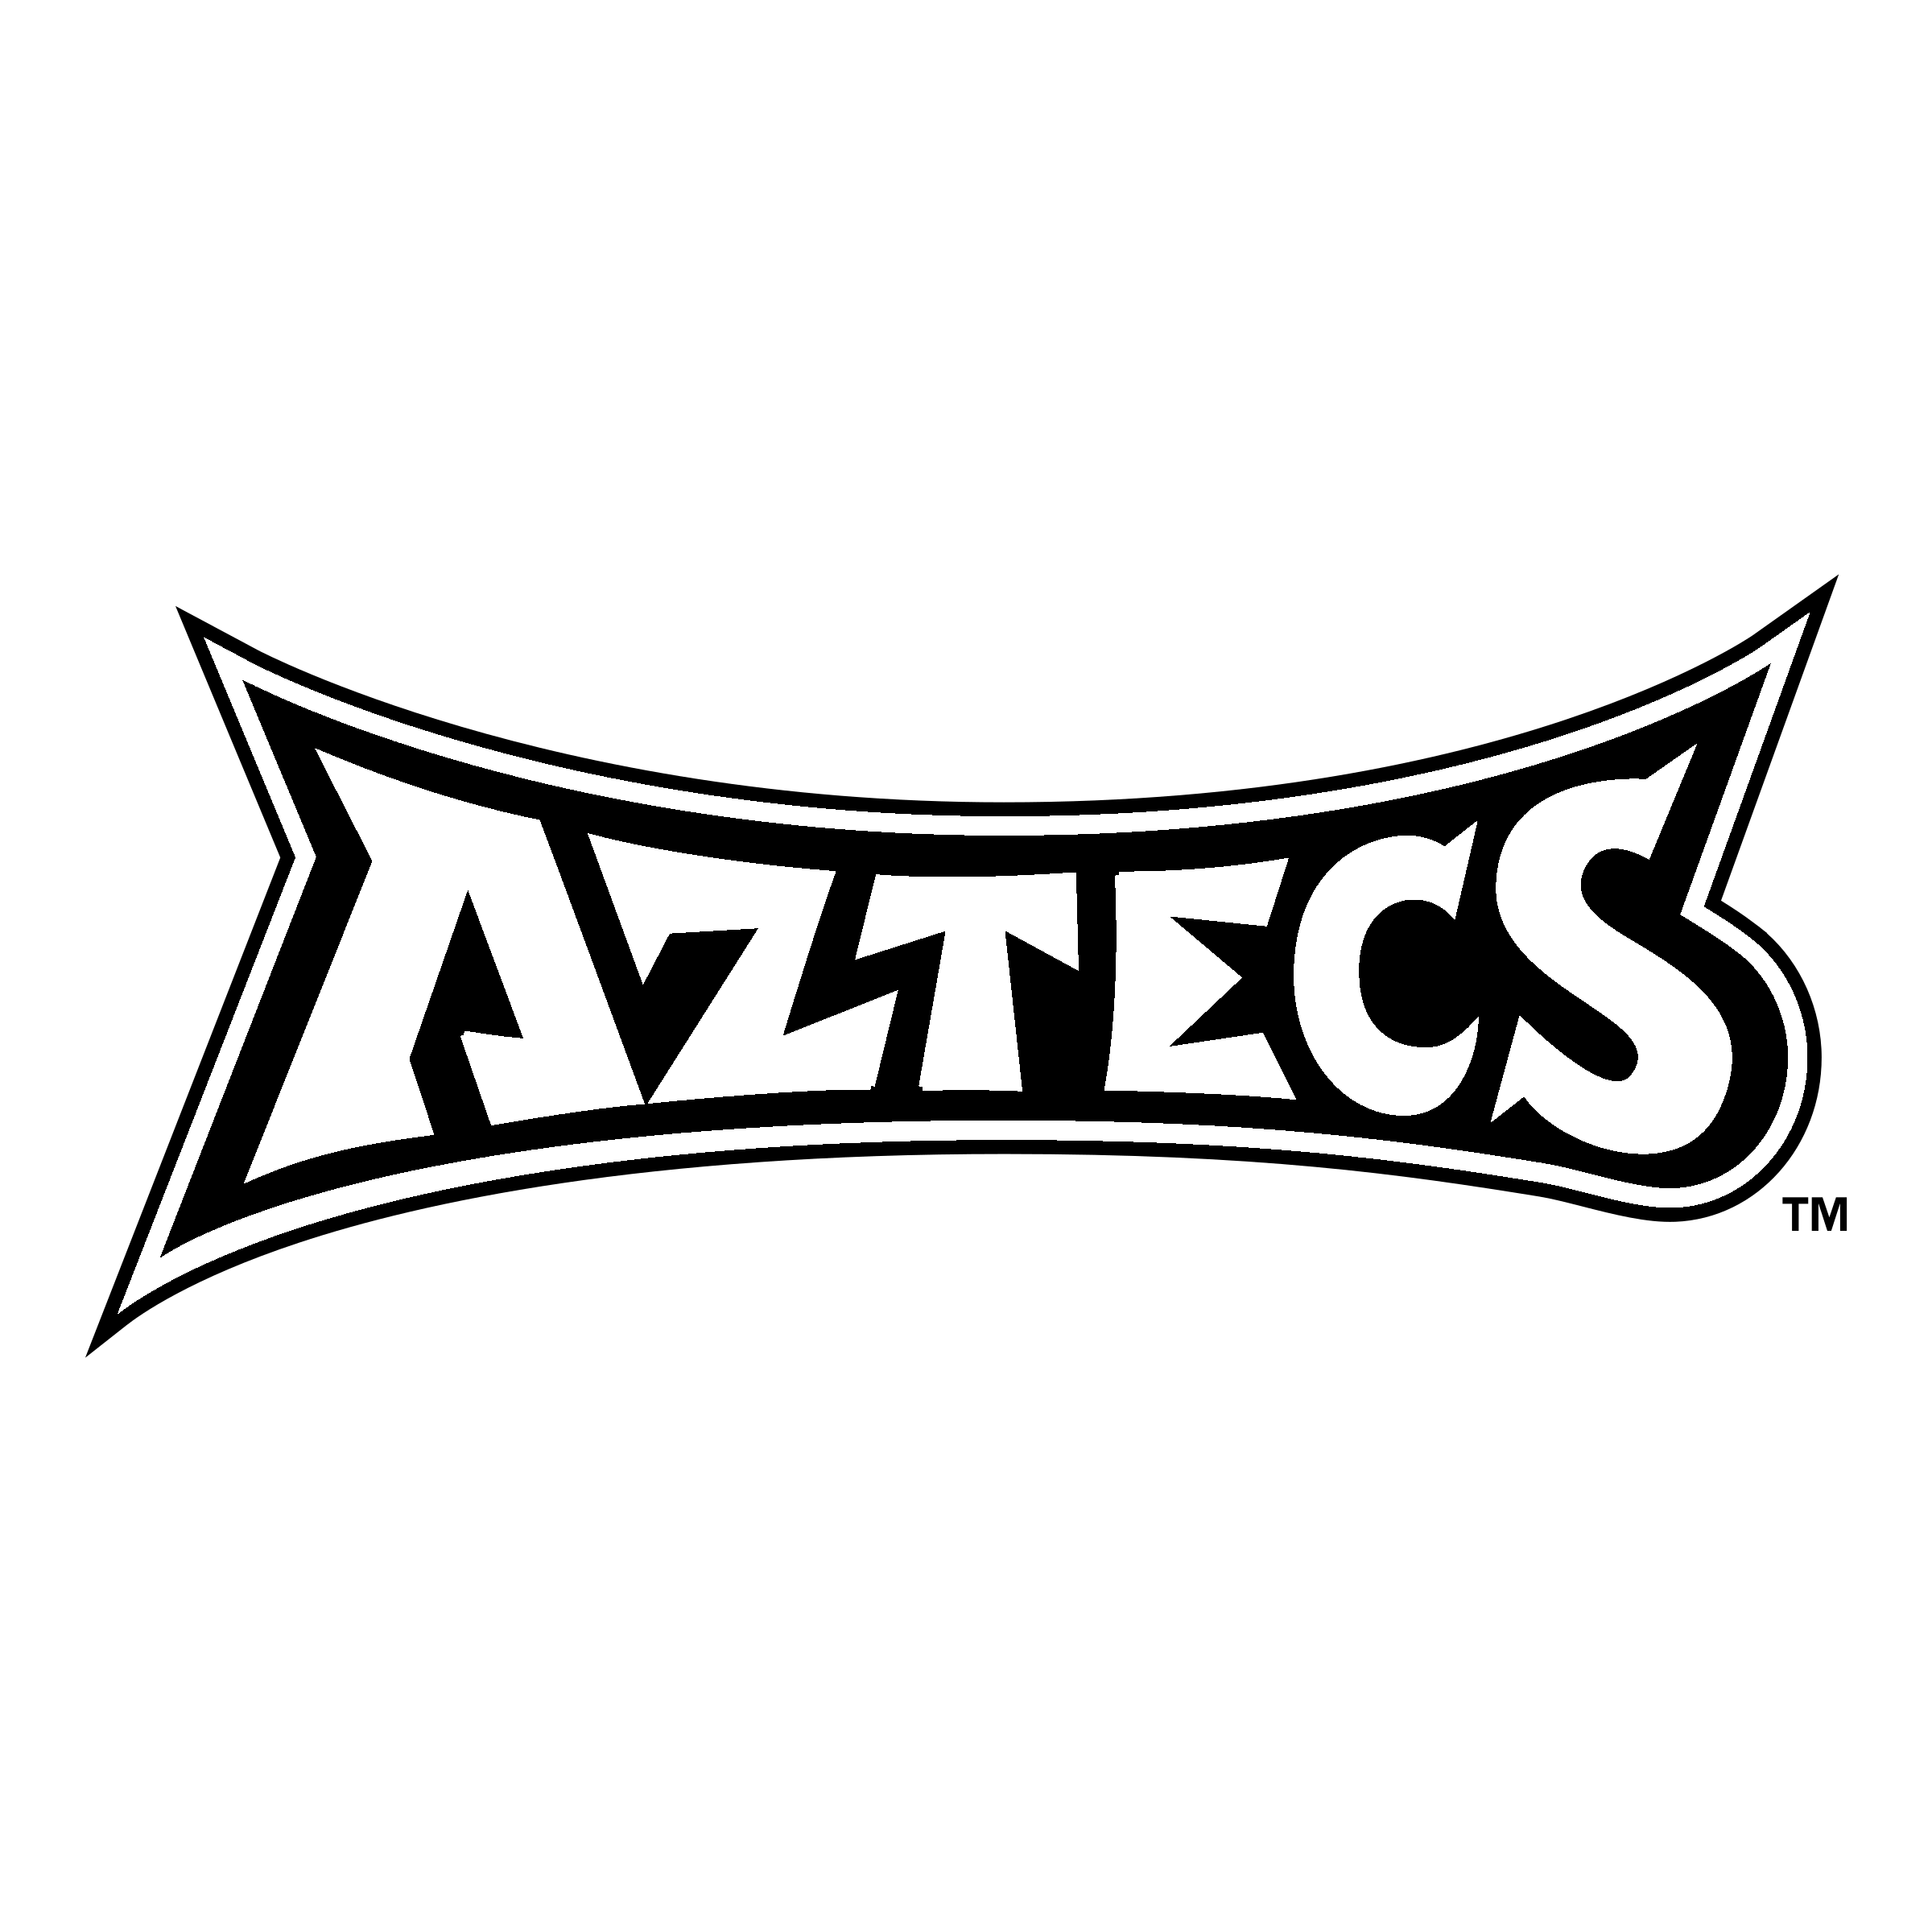 Aztecs Logo - San Diego State Aztecs Logo PNG Transparent & SVG Vector - Freebie ...